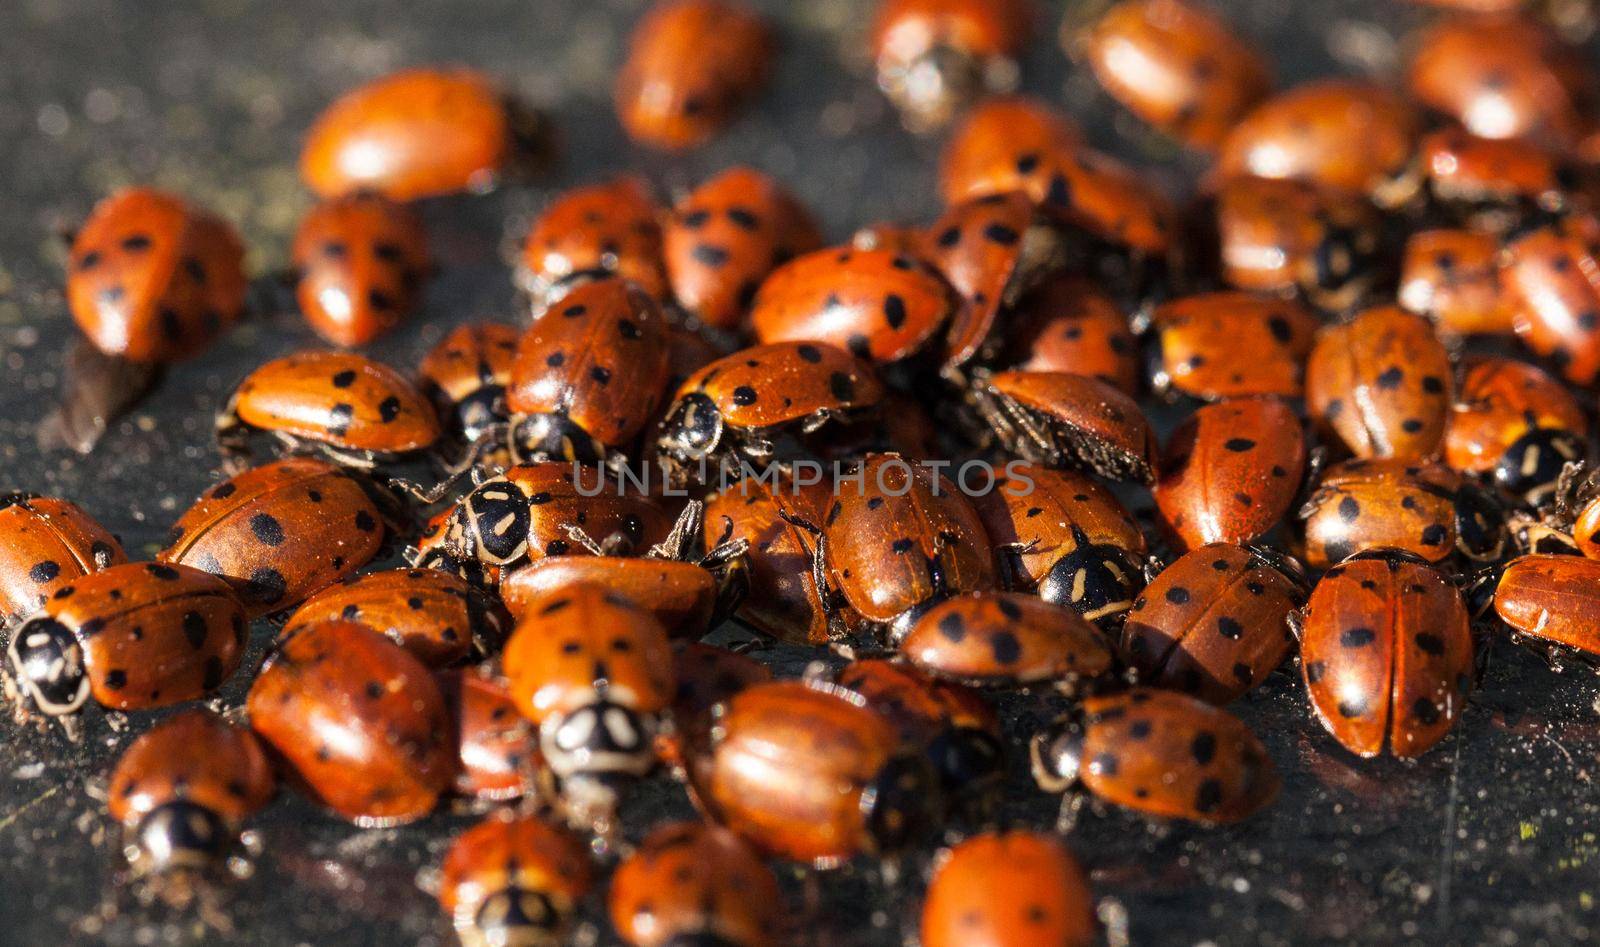 Hibernating cluster of Convergent lady beetle by steffstarr